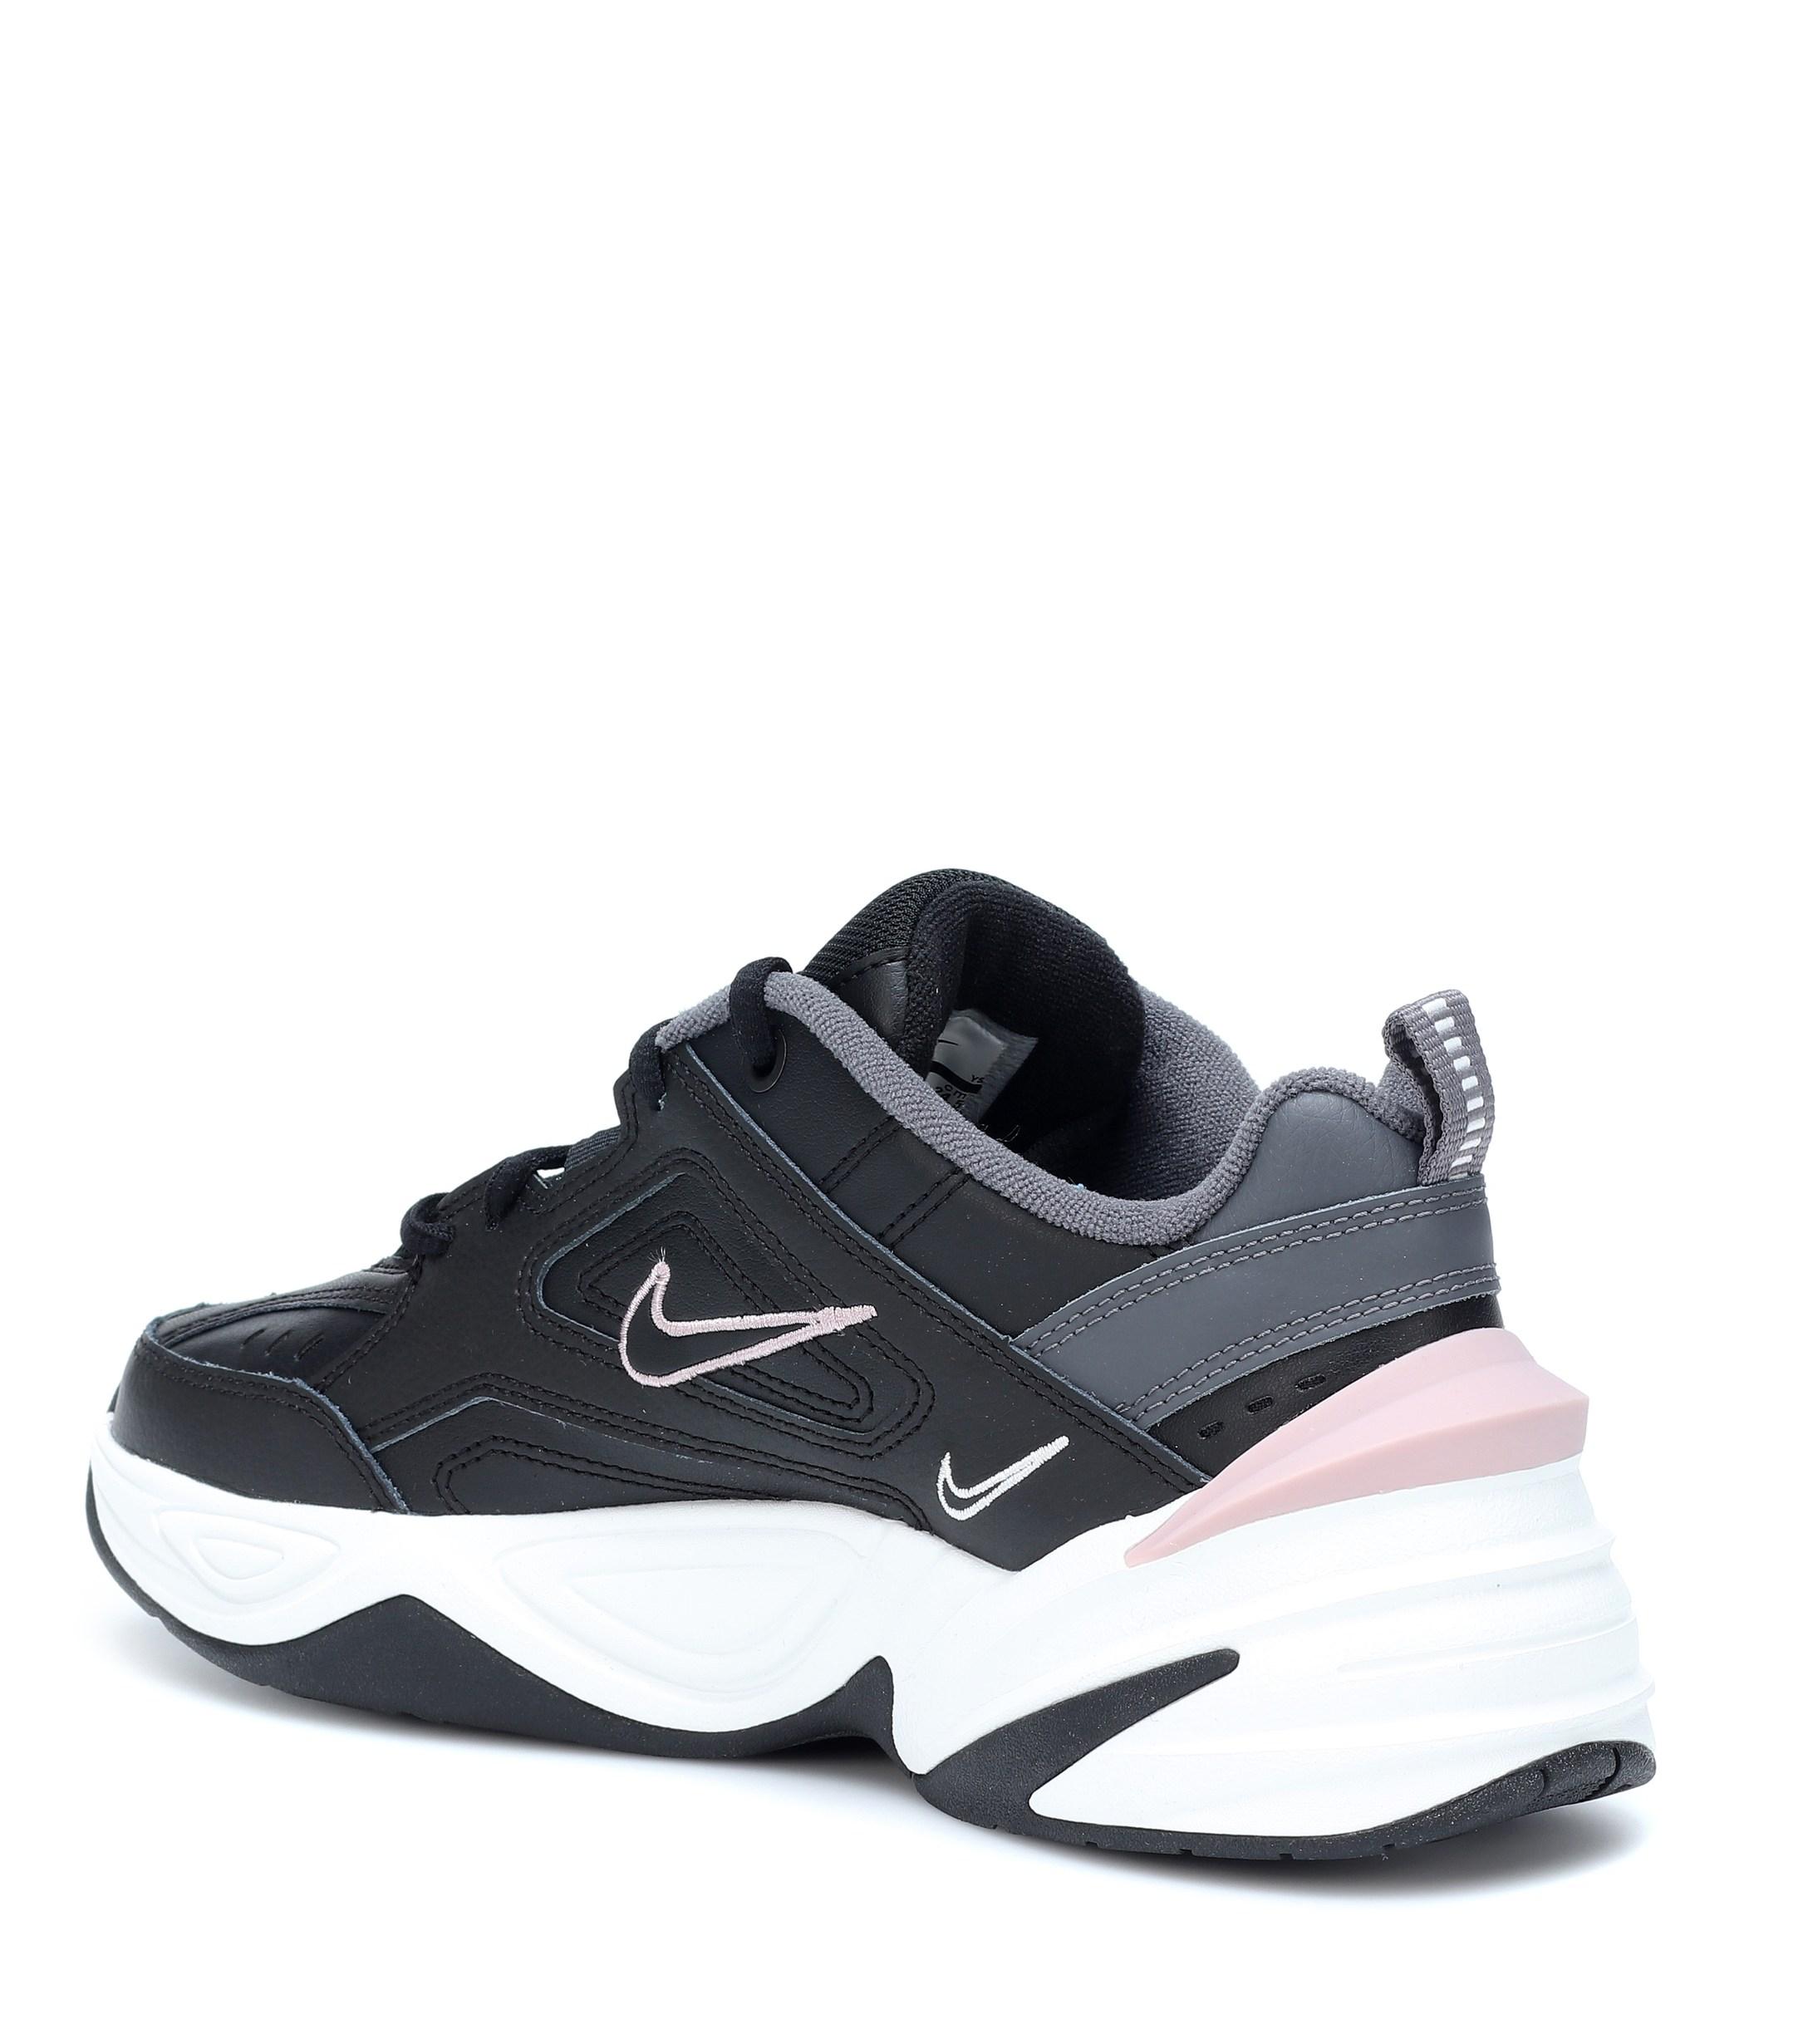 Nike M2k Tekno Sneakers in Black - Lyst